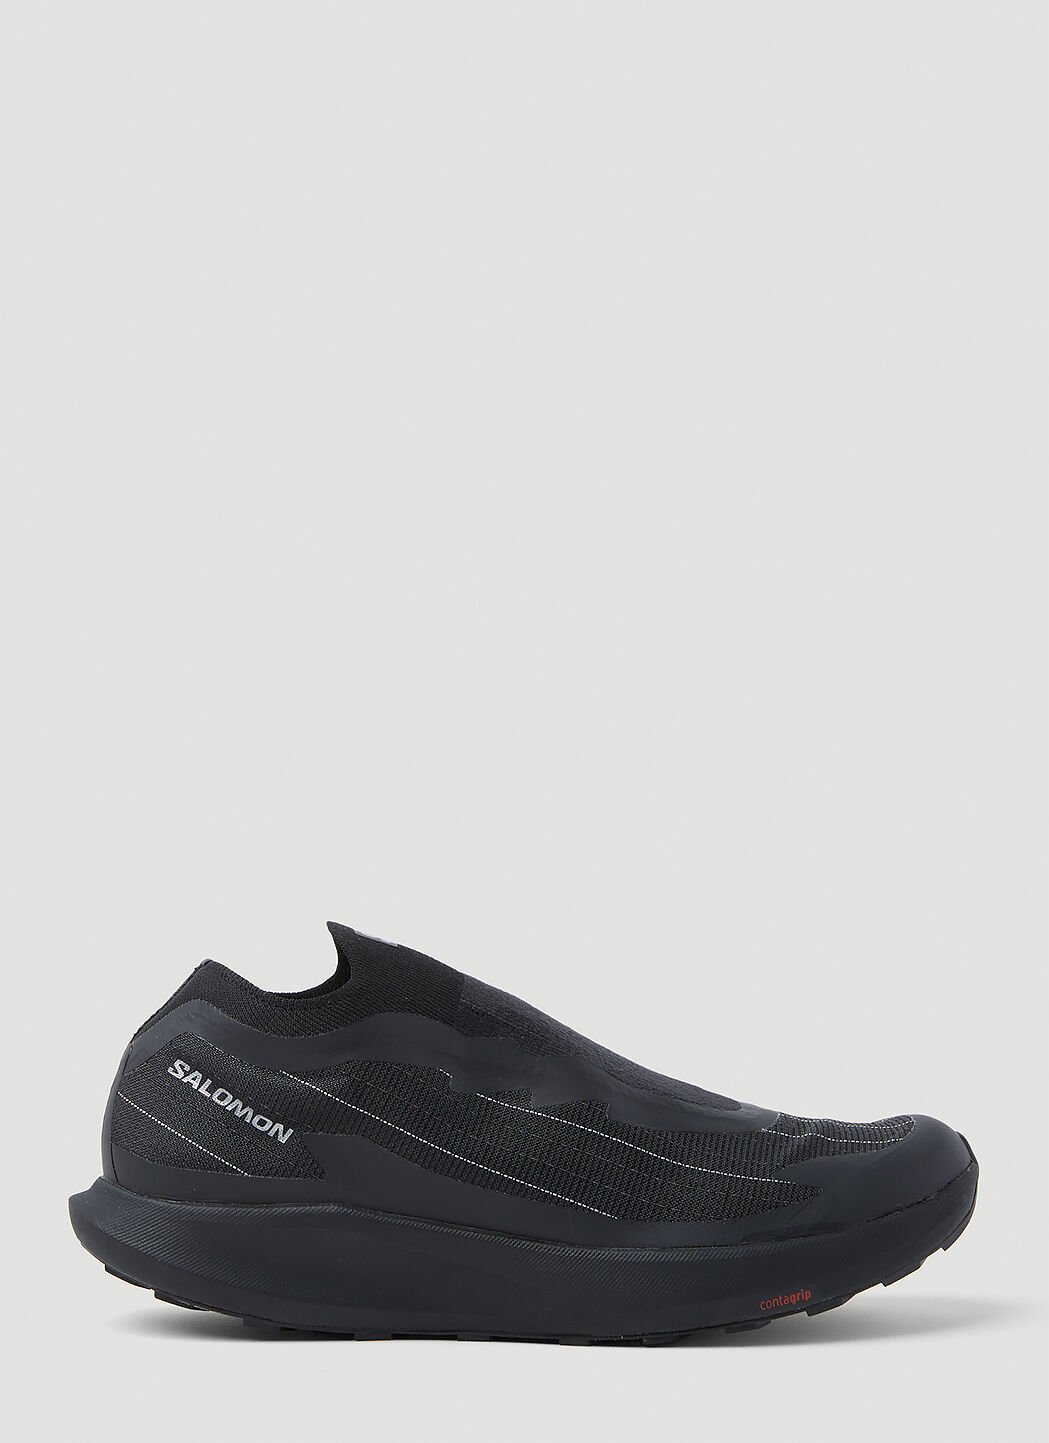 GmbH Pulsar Reflective Advanced Sneakers Black gmb0154001